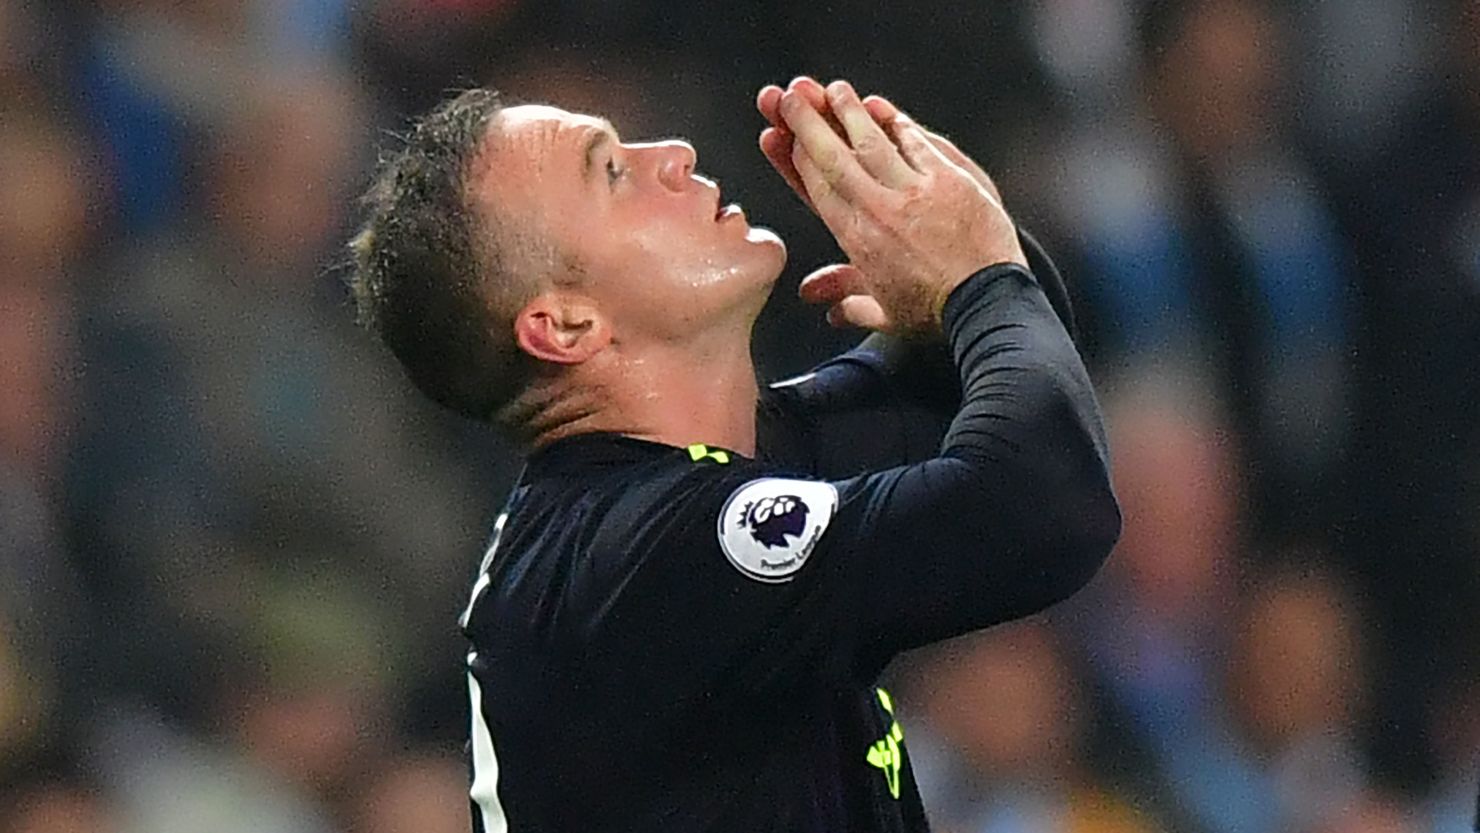 Wayne Rooney plays for English Premier League club Everton.